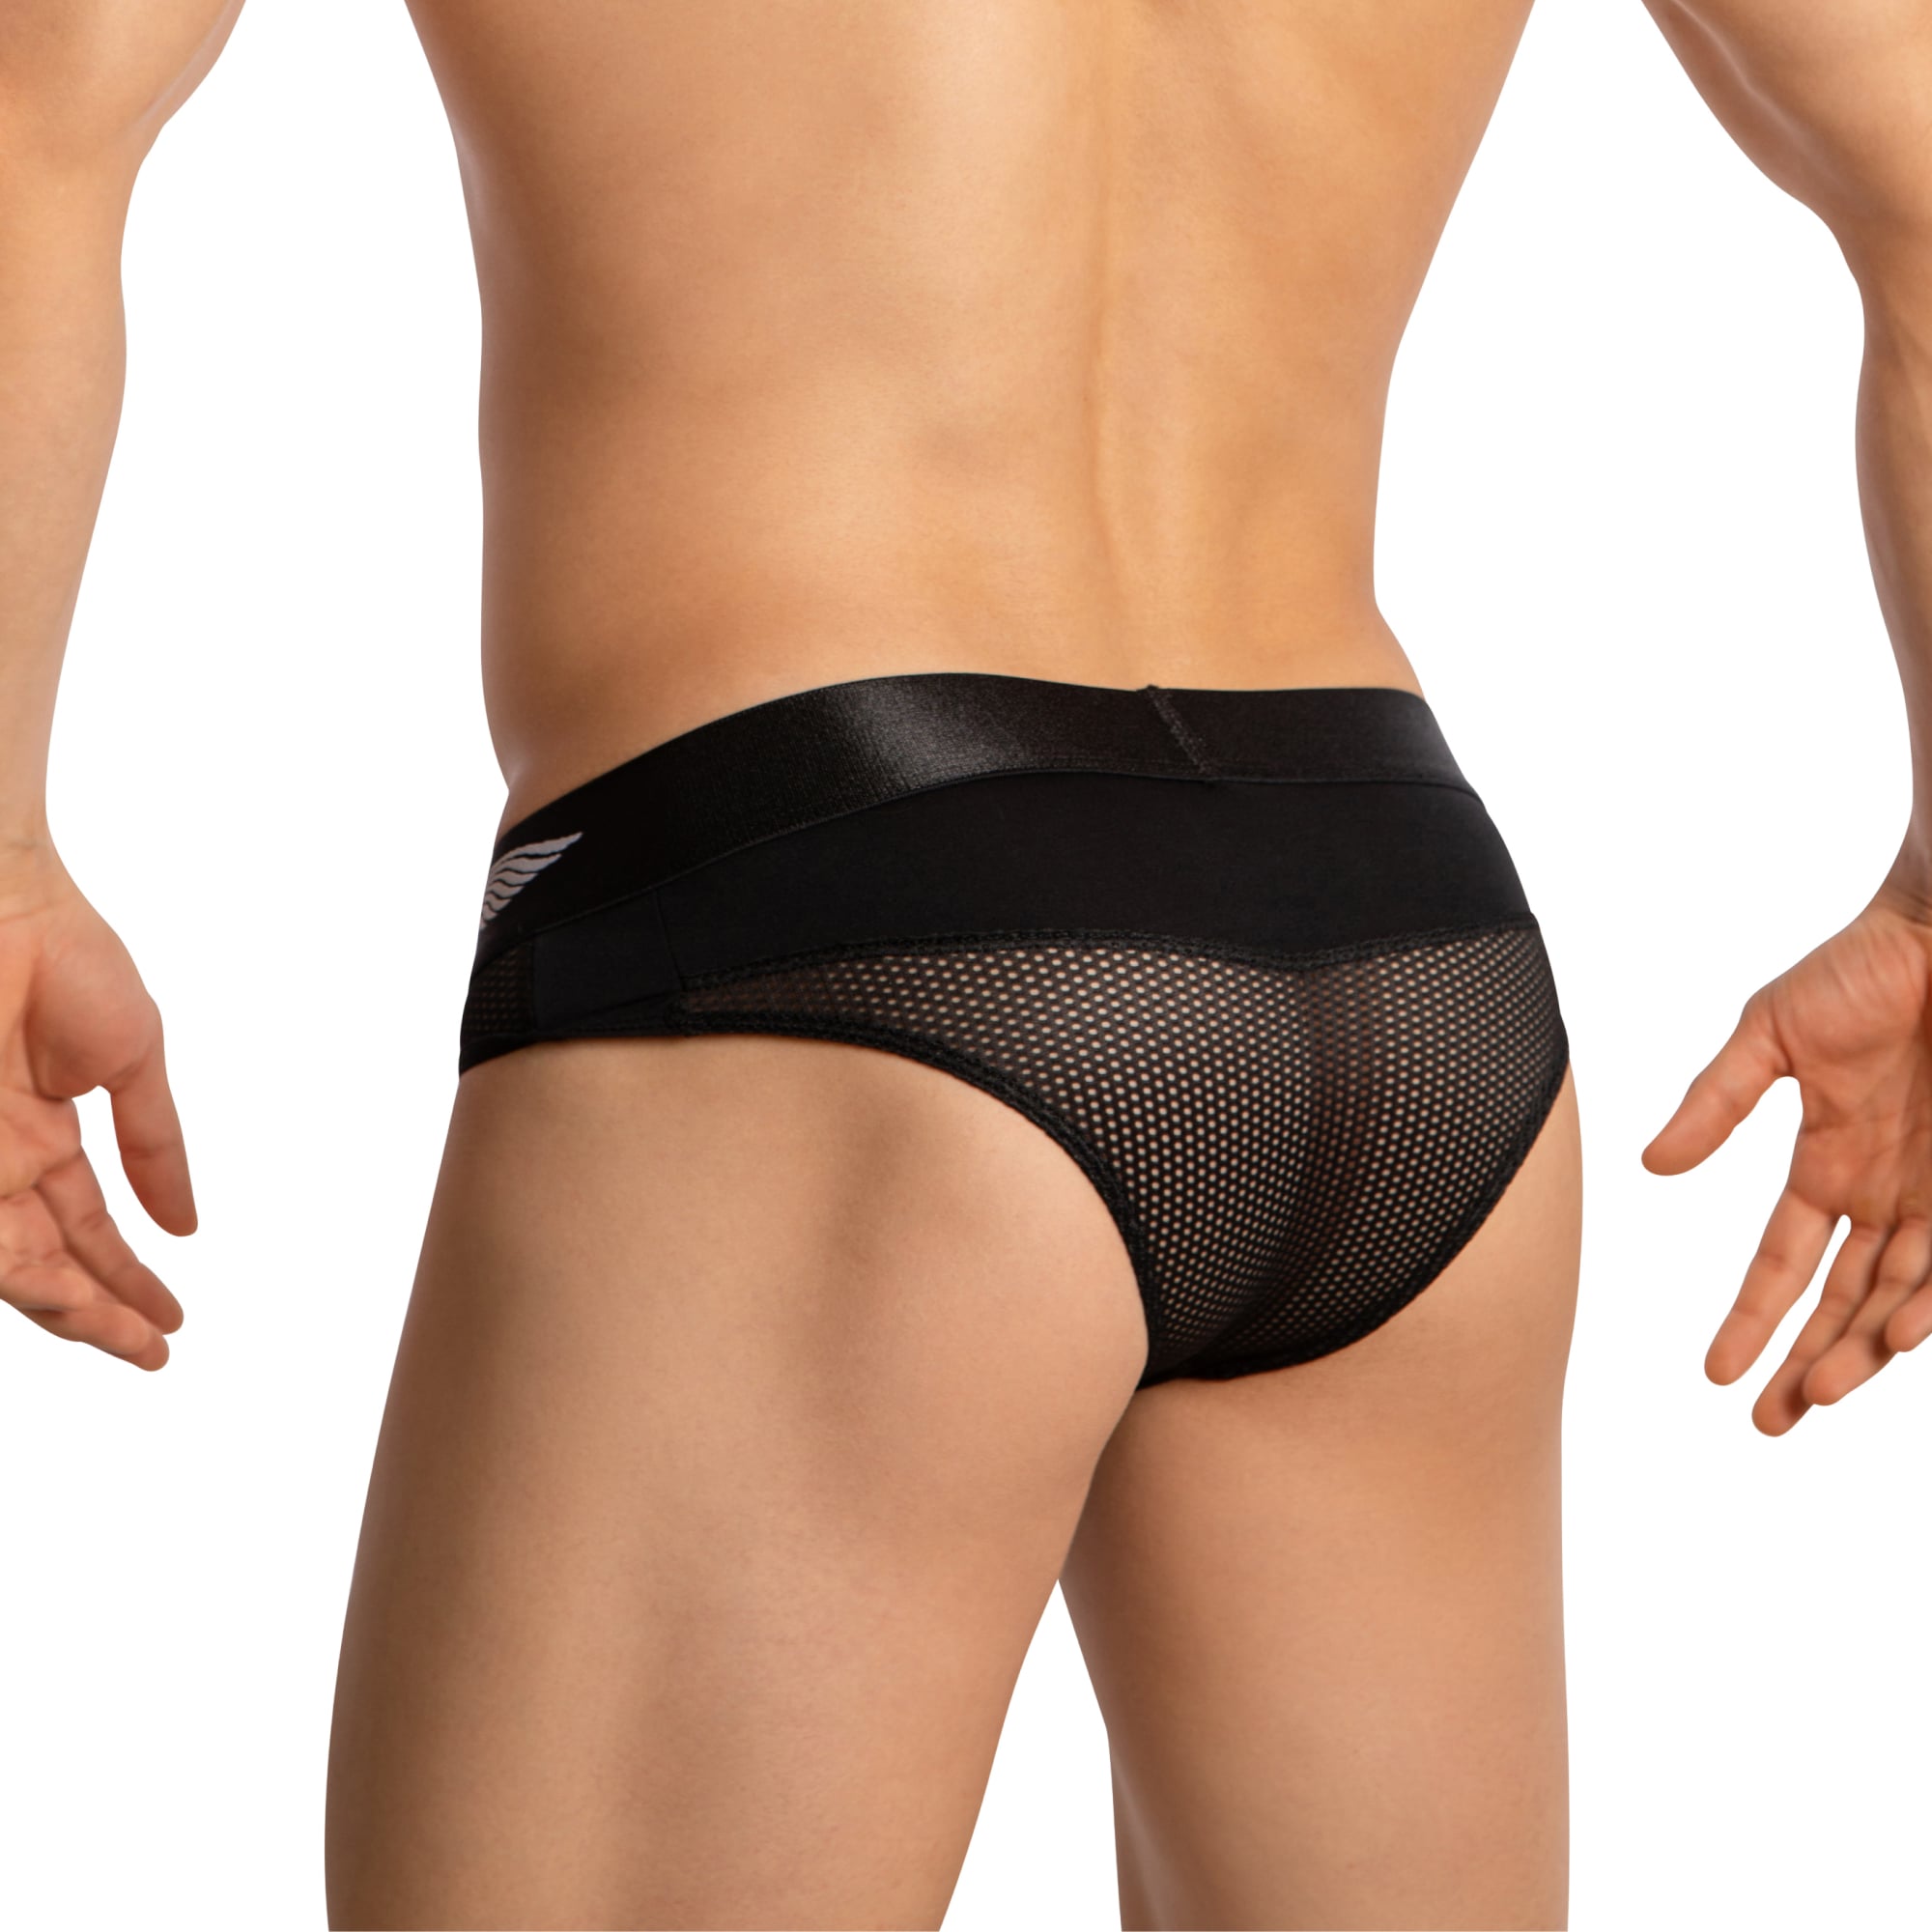 Agacio Men's Sheer Thongs AGJ042 Sexy Men's Underwear Choice